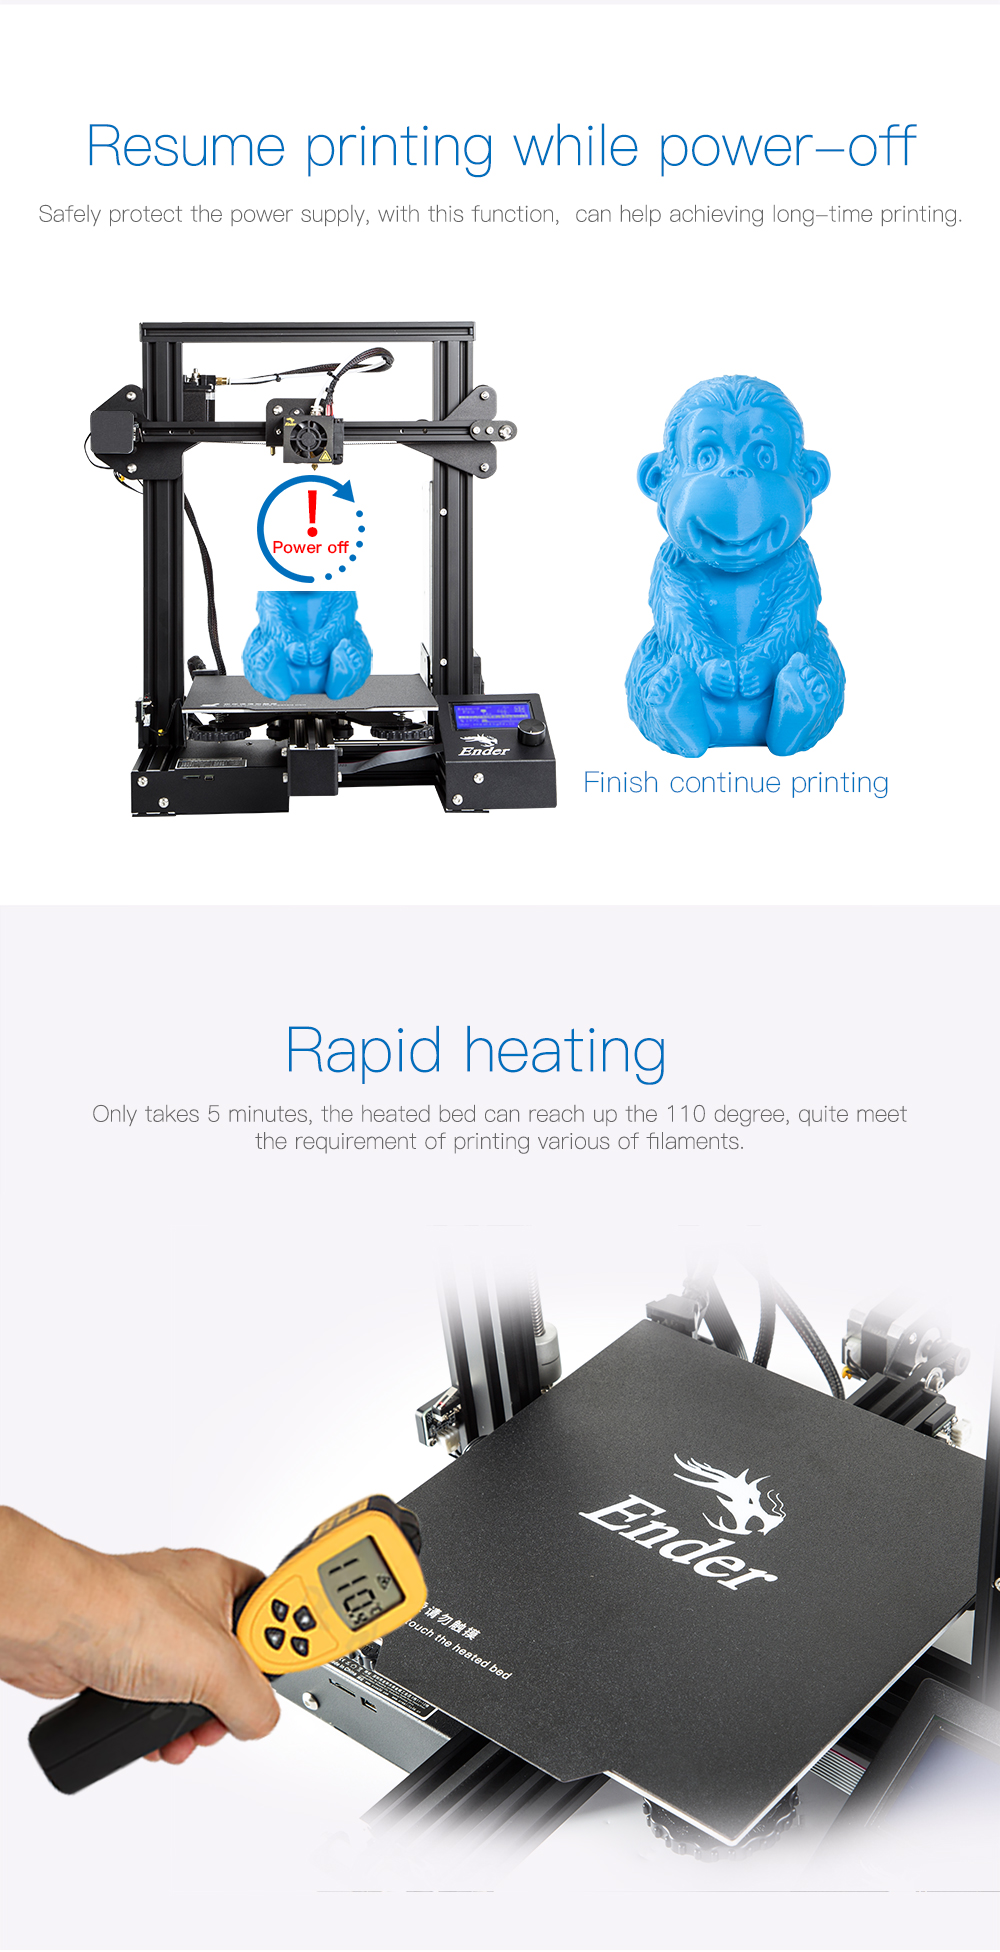 Creality 3D® Ender-3 Pro V-slot Prusa I3 DIY 3D Printer 220x220x250mm Printing Size With Magnetic Removable Platform Sticker/Power Resume Function/Off 9